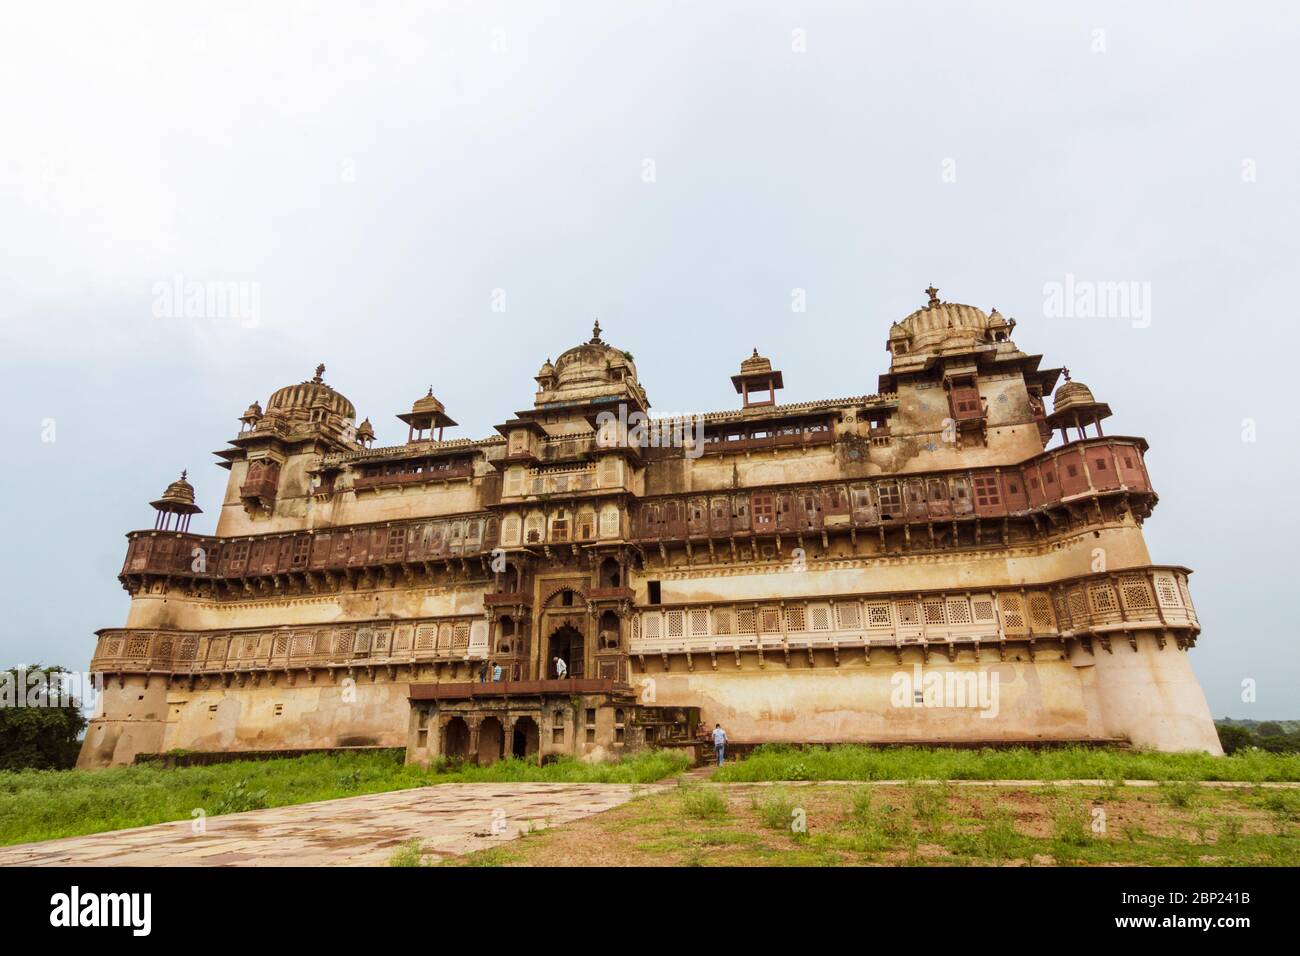 Orchha, Madhya Pradesh, India : 17th century Jahangir Mahal palace within the Orchha Fort complex. Stock Photo